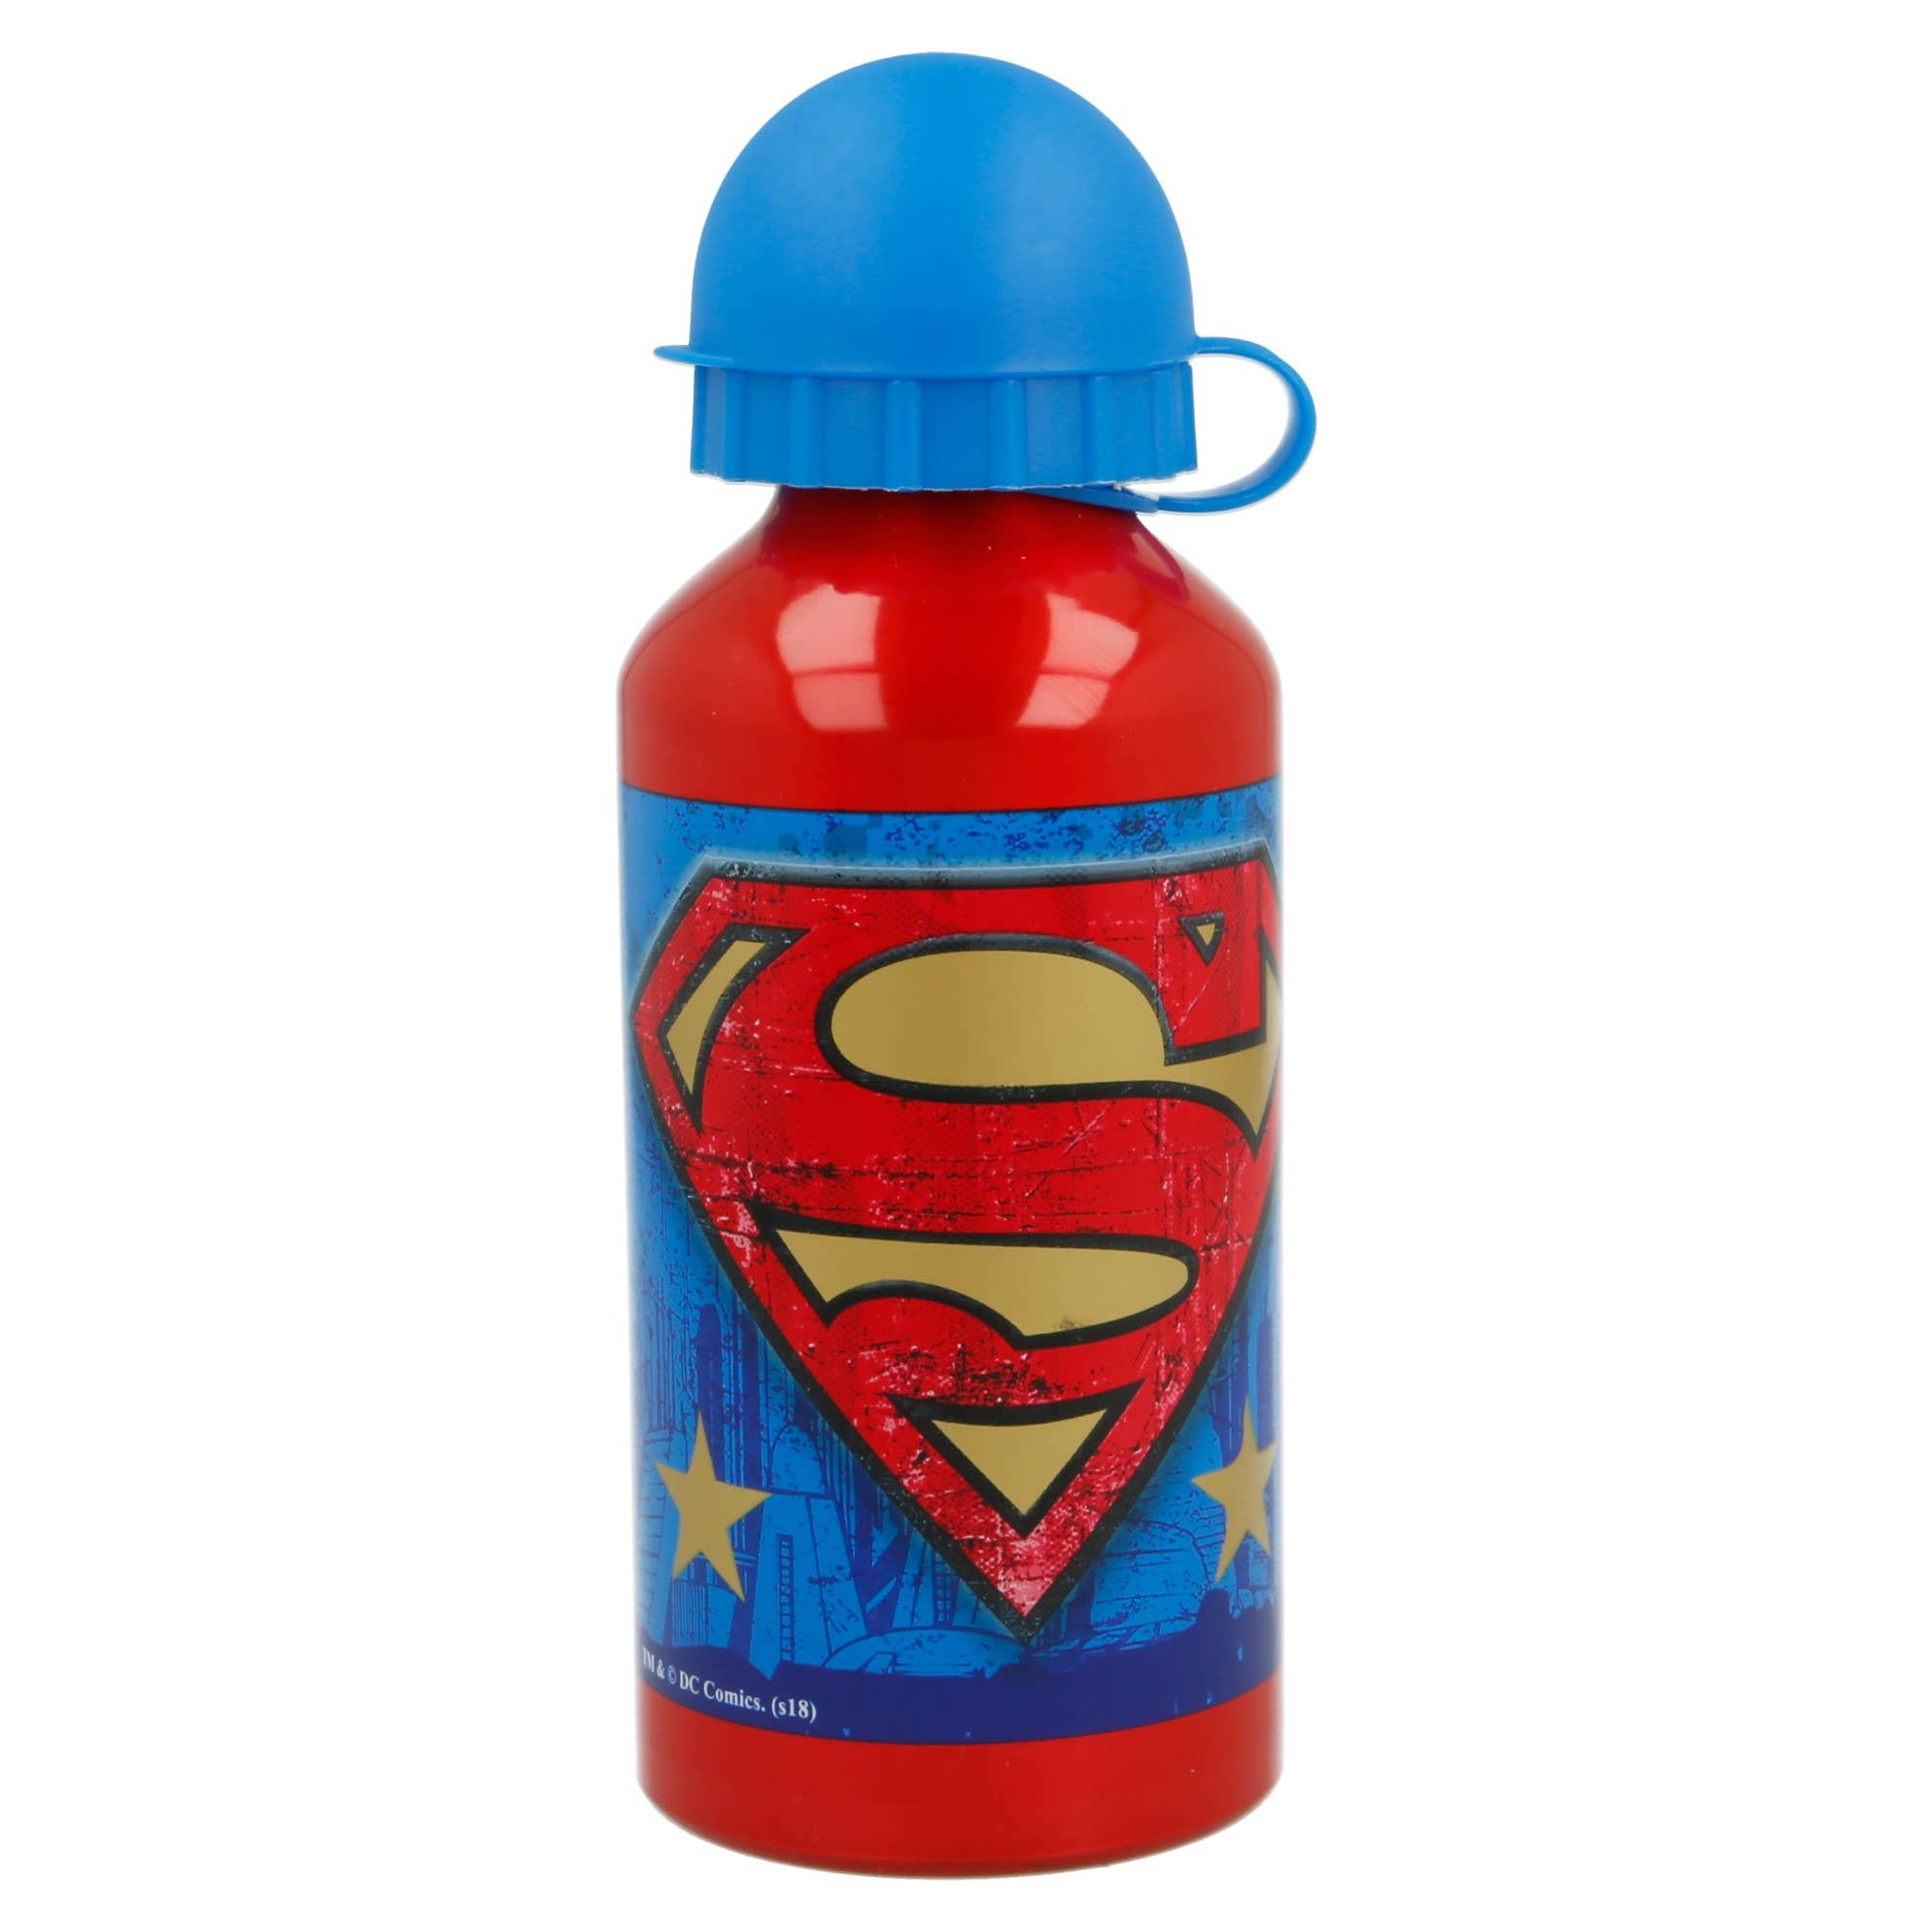 Superman 18 oz. Stainless Steel Water Bottle